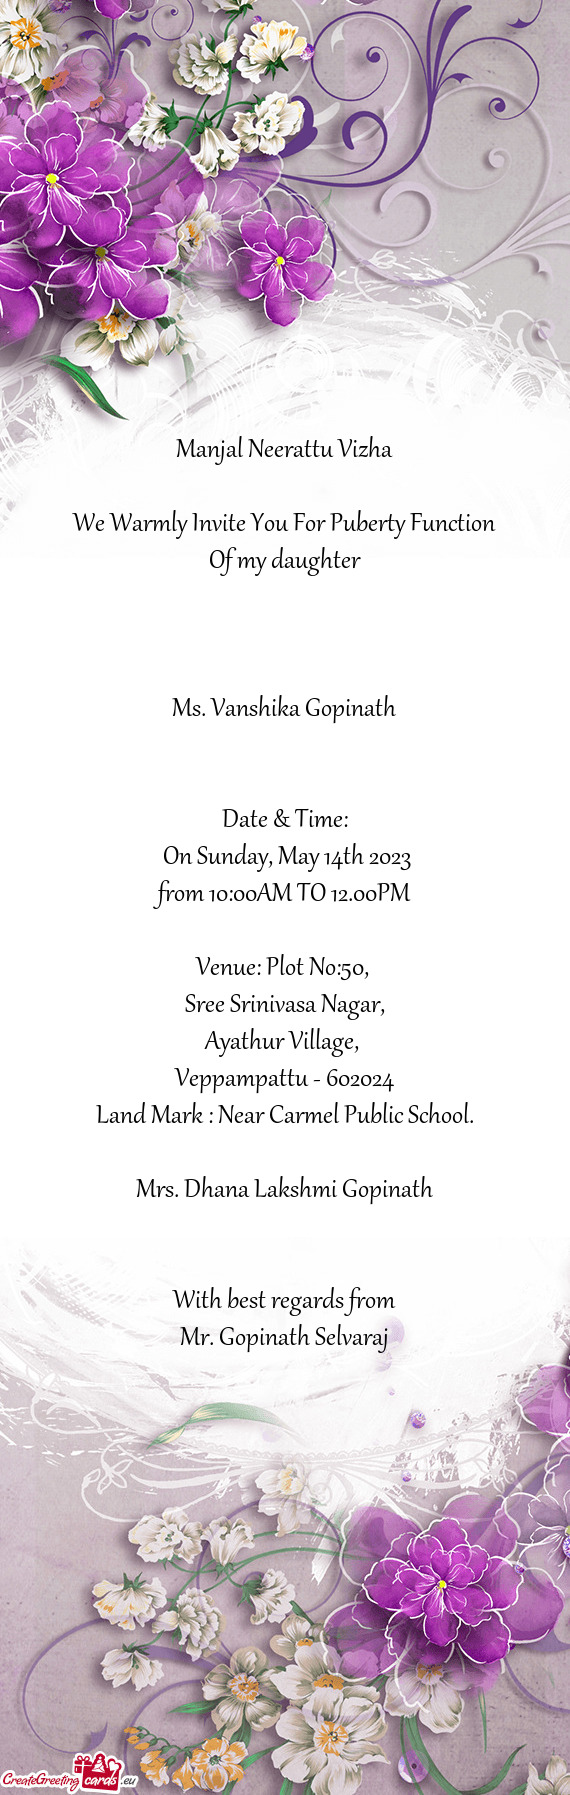 Ms. Vanshika Gopinath